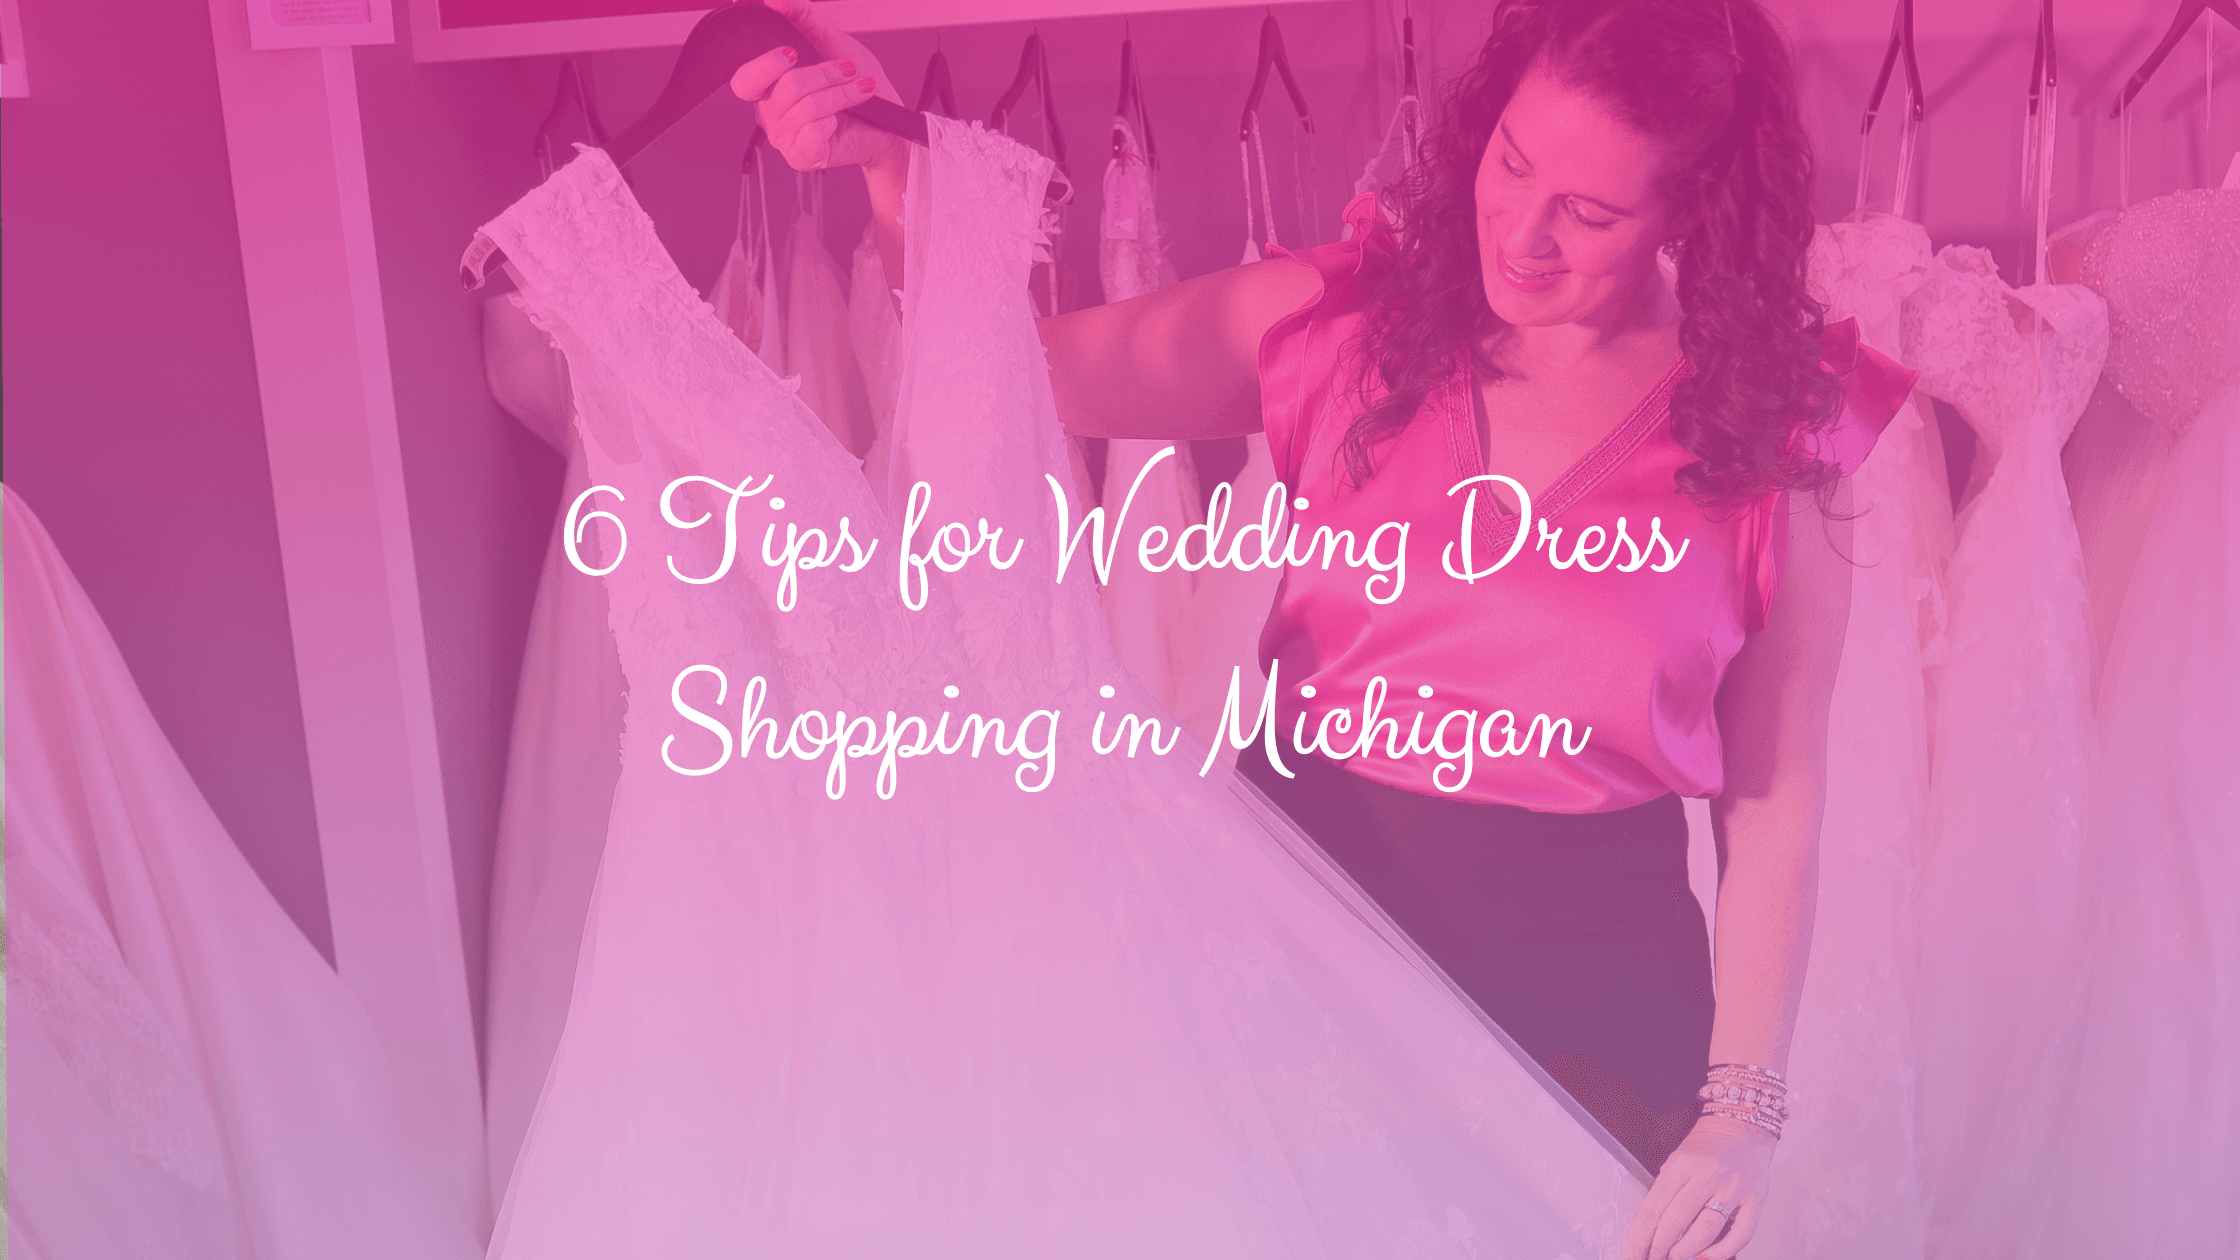 6 Tips for Wedding Dress Shopping in Michigan